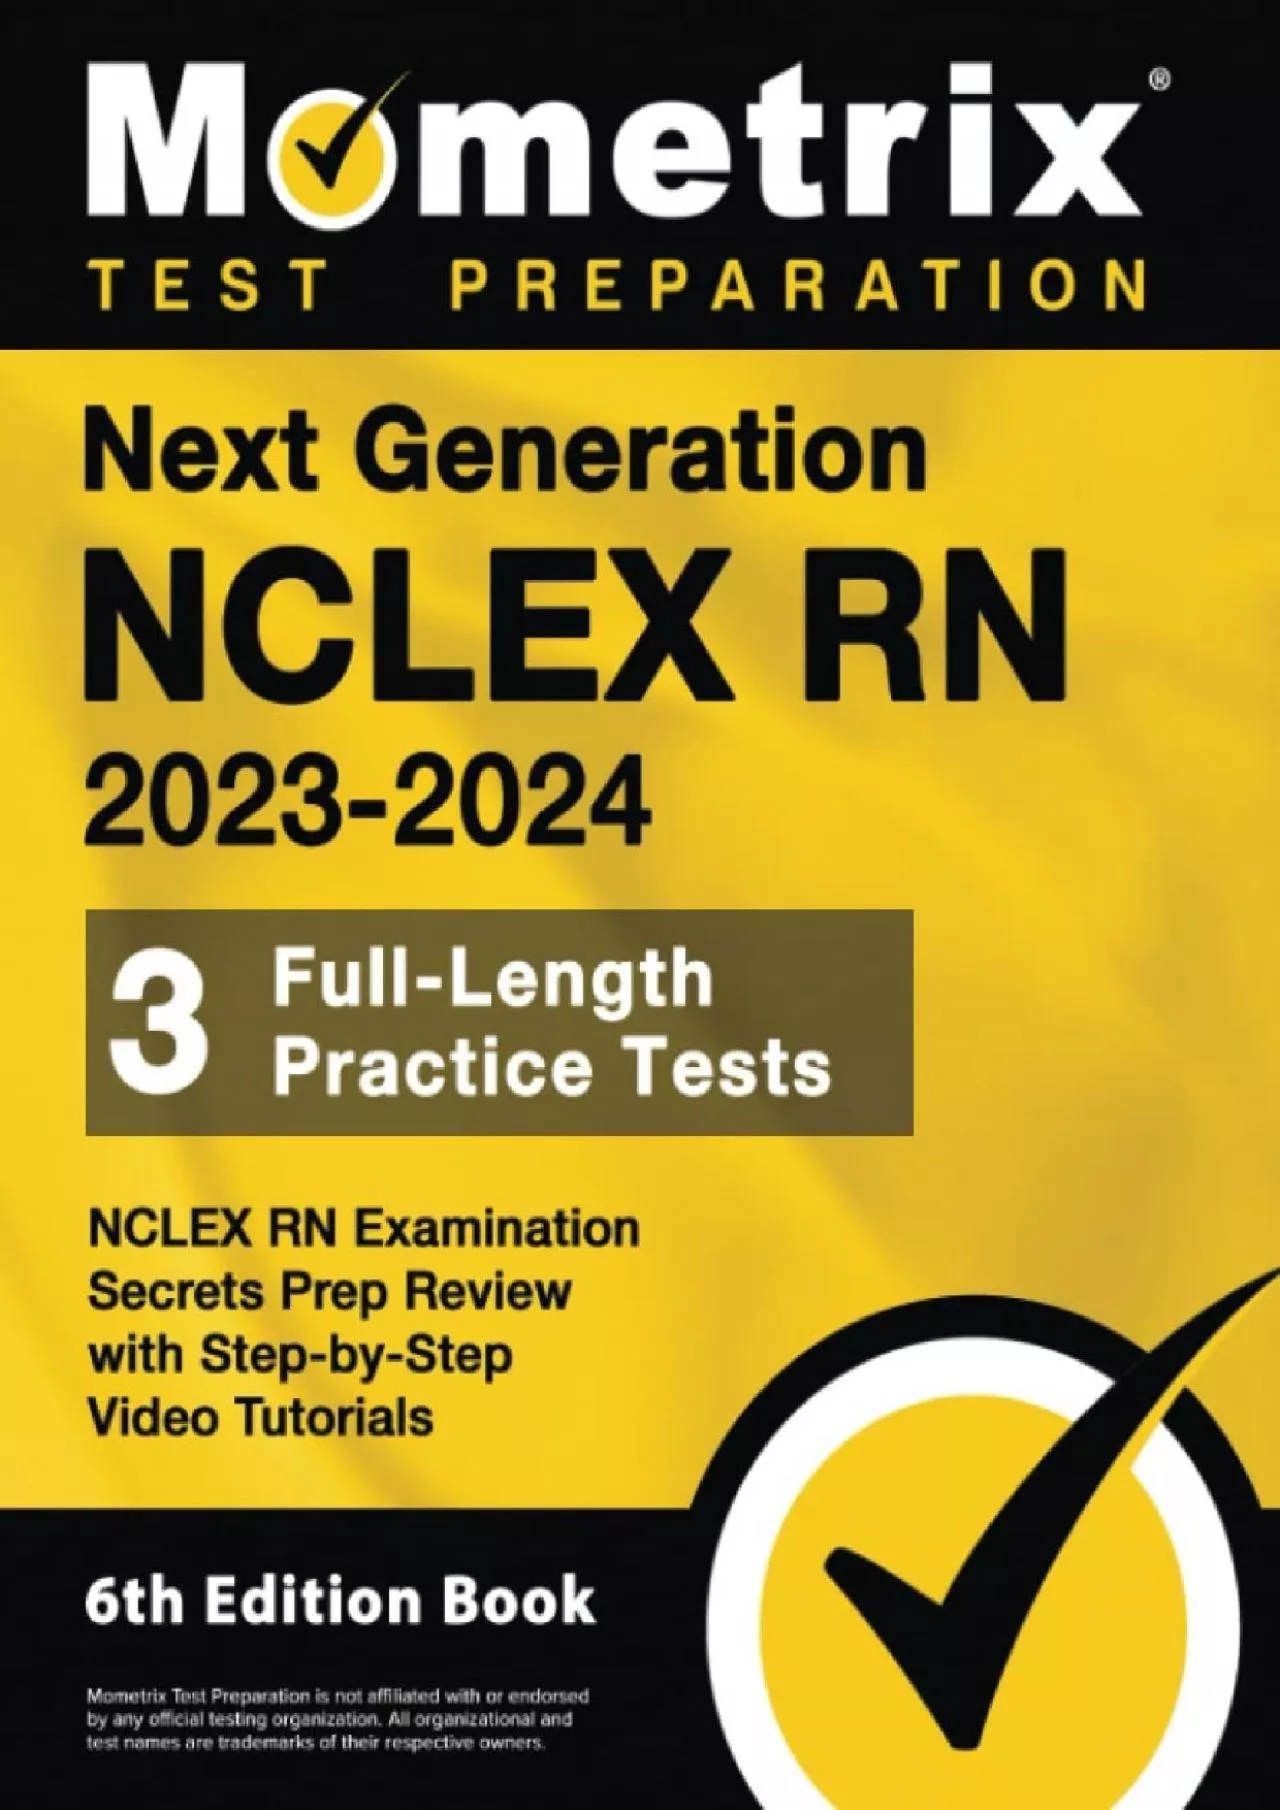 [EBOOK] Next Generation NCLEX RN 2023-2024: 3 Full-Length Practice Tests, NCLEX RN Examination